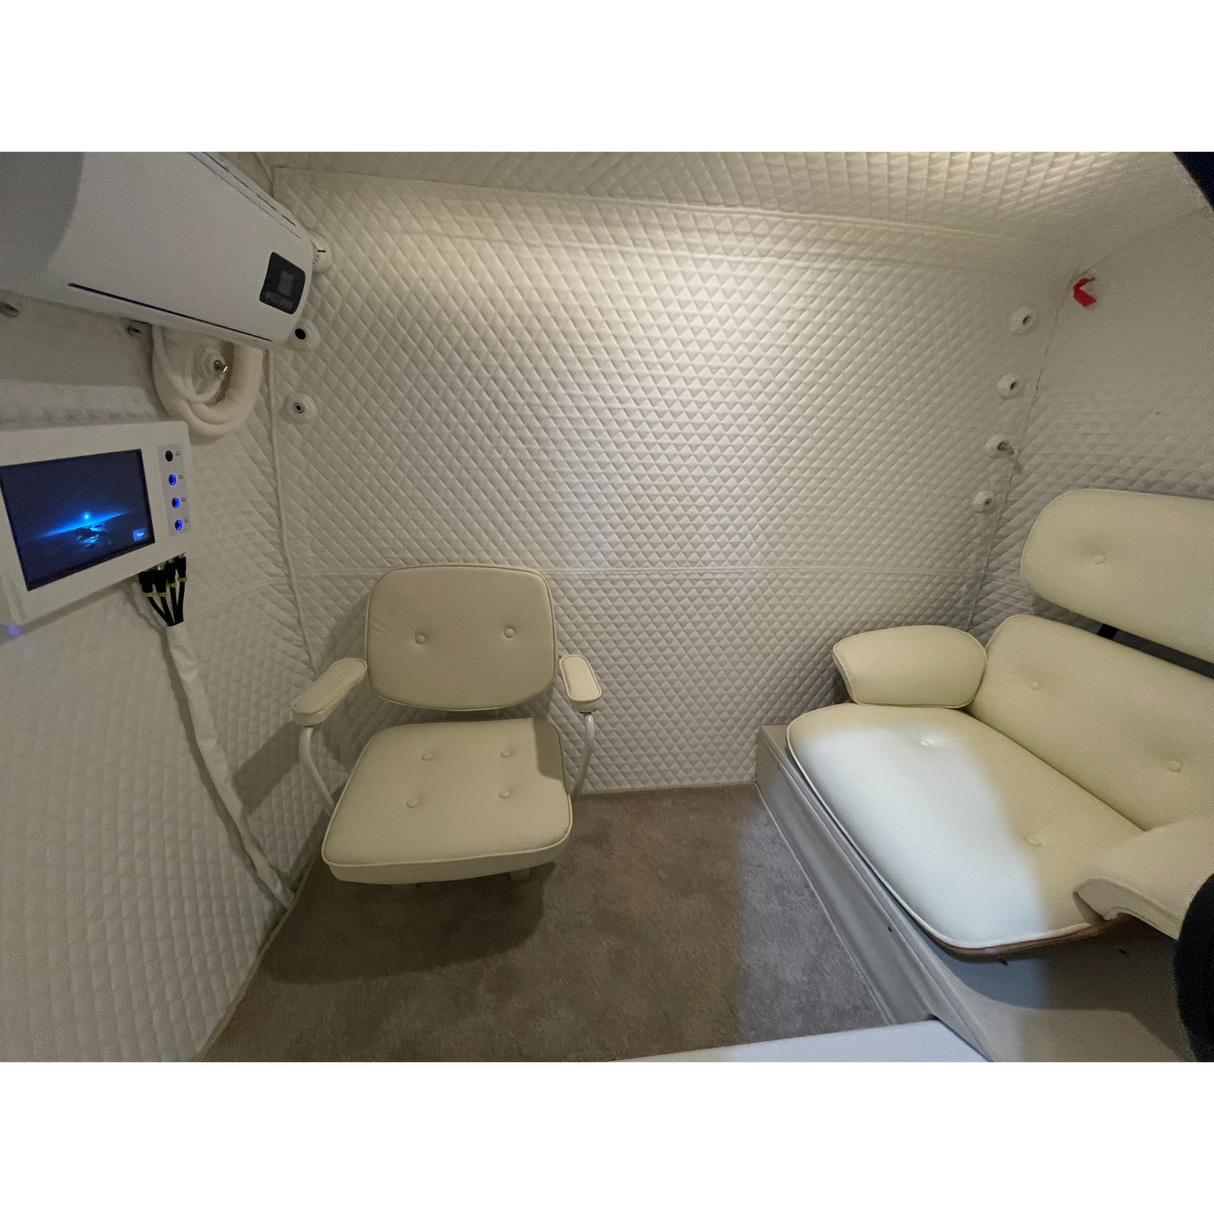 Macy-Pan Hyperbaric Oxygen Therapy Chamber Hard Type - HE5000 Mini